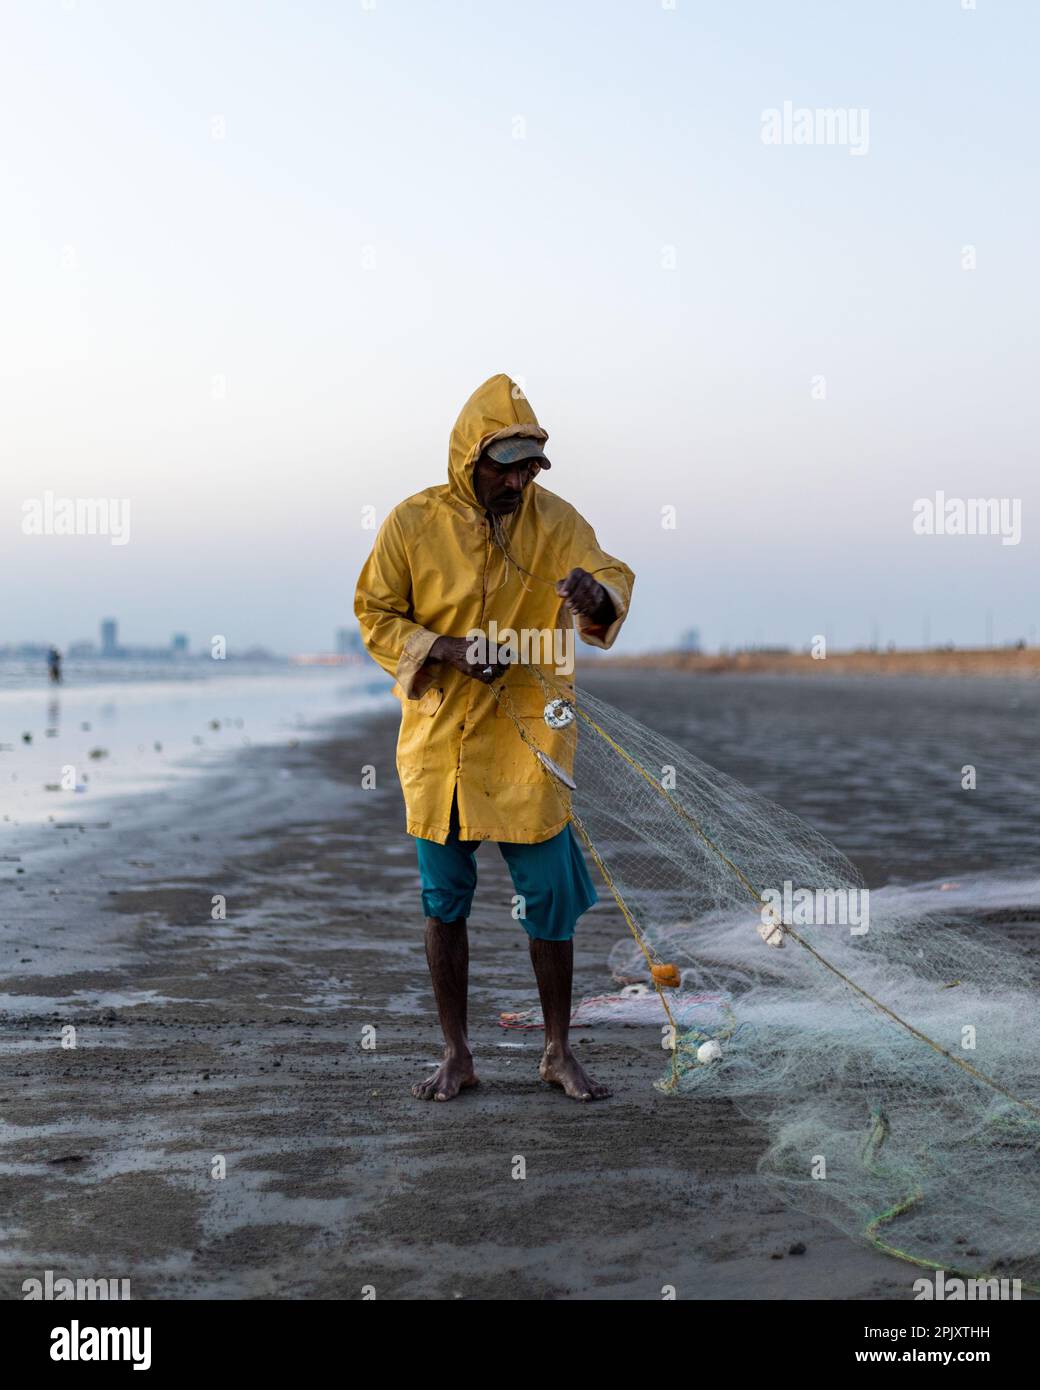 https://c8.alamy.com/comp/2PJXTHH/karachi-pakistan-2021-a-fisherman-wearing-yellow-jacket-preparing-fishing-net-for-fishing-at-sea-view-in-evening-time-2PJXTHH.jpg